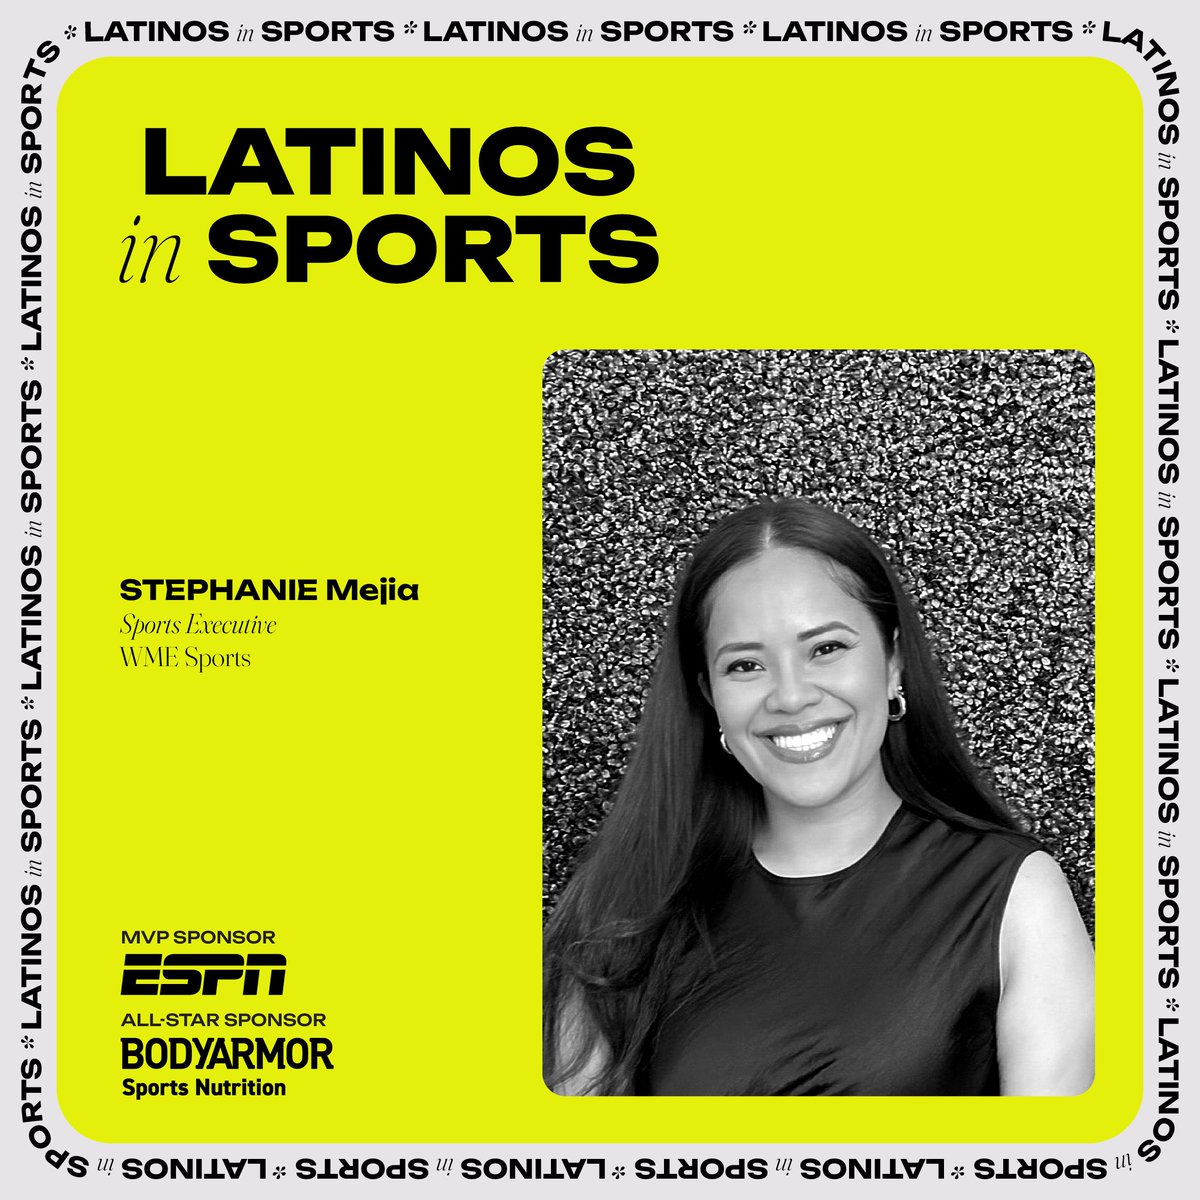 Latinos in Sports 🏀: Athlete and executive Stephanie Mejia changes the game at WME/WME Sports: hubs.la/Q02dqVcg0
#HispanicExecMag #LatinosInSports #SportsLeadership @SMejia_